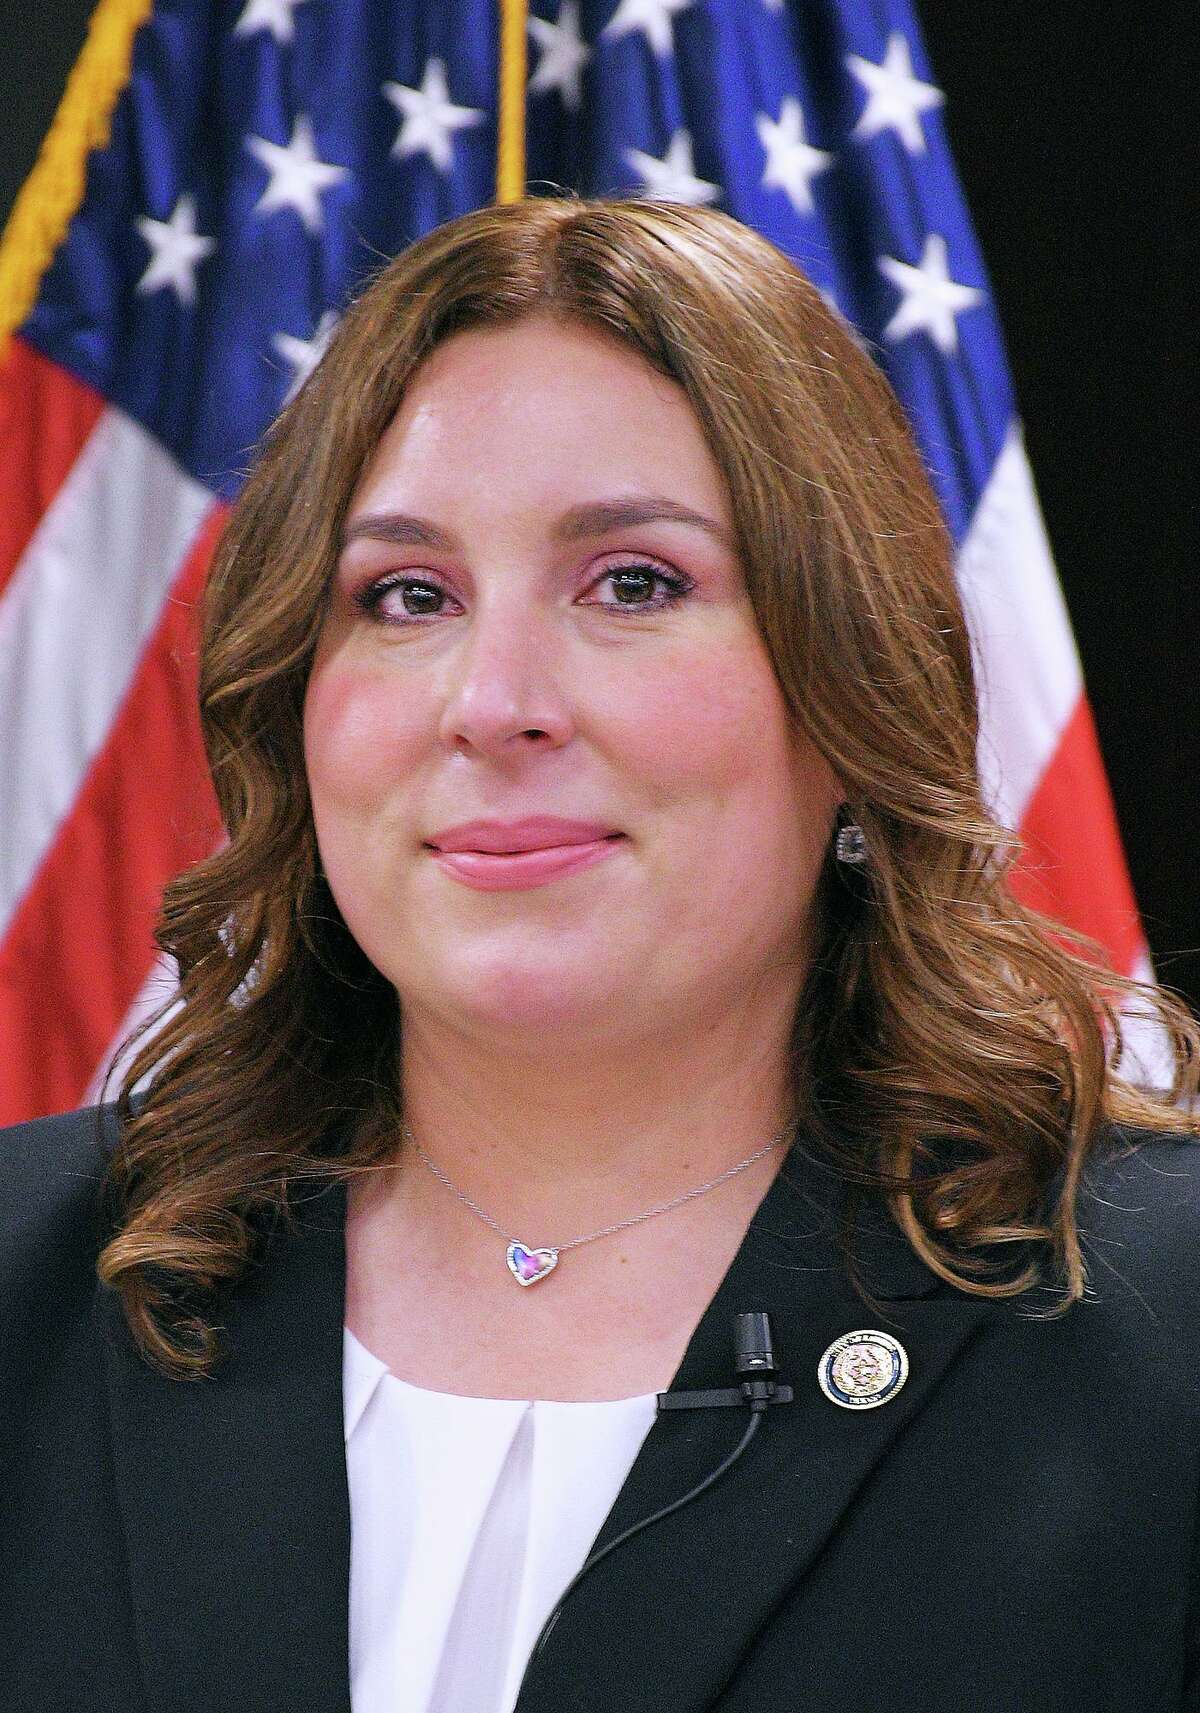 District VII Councilwoman Vanessa Perez was sworn in Wednesday.